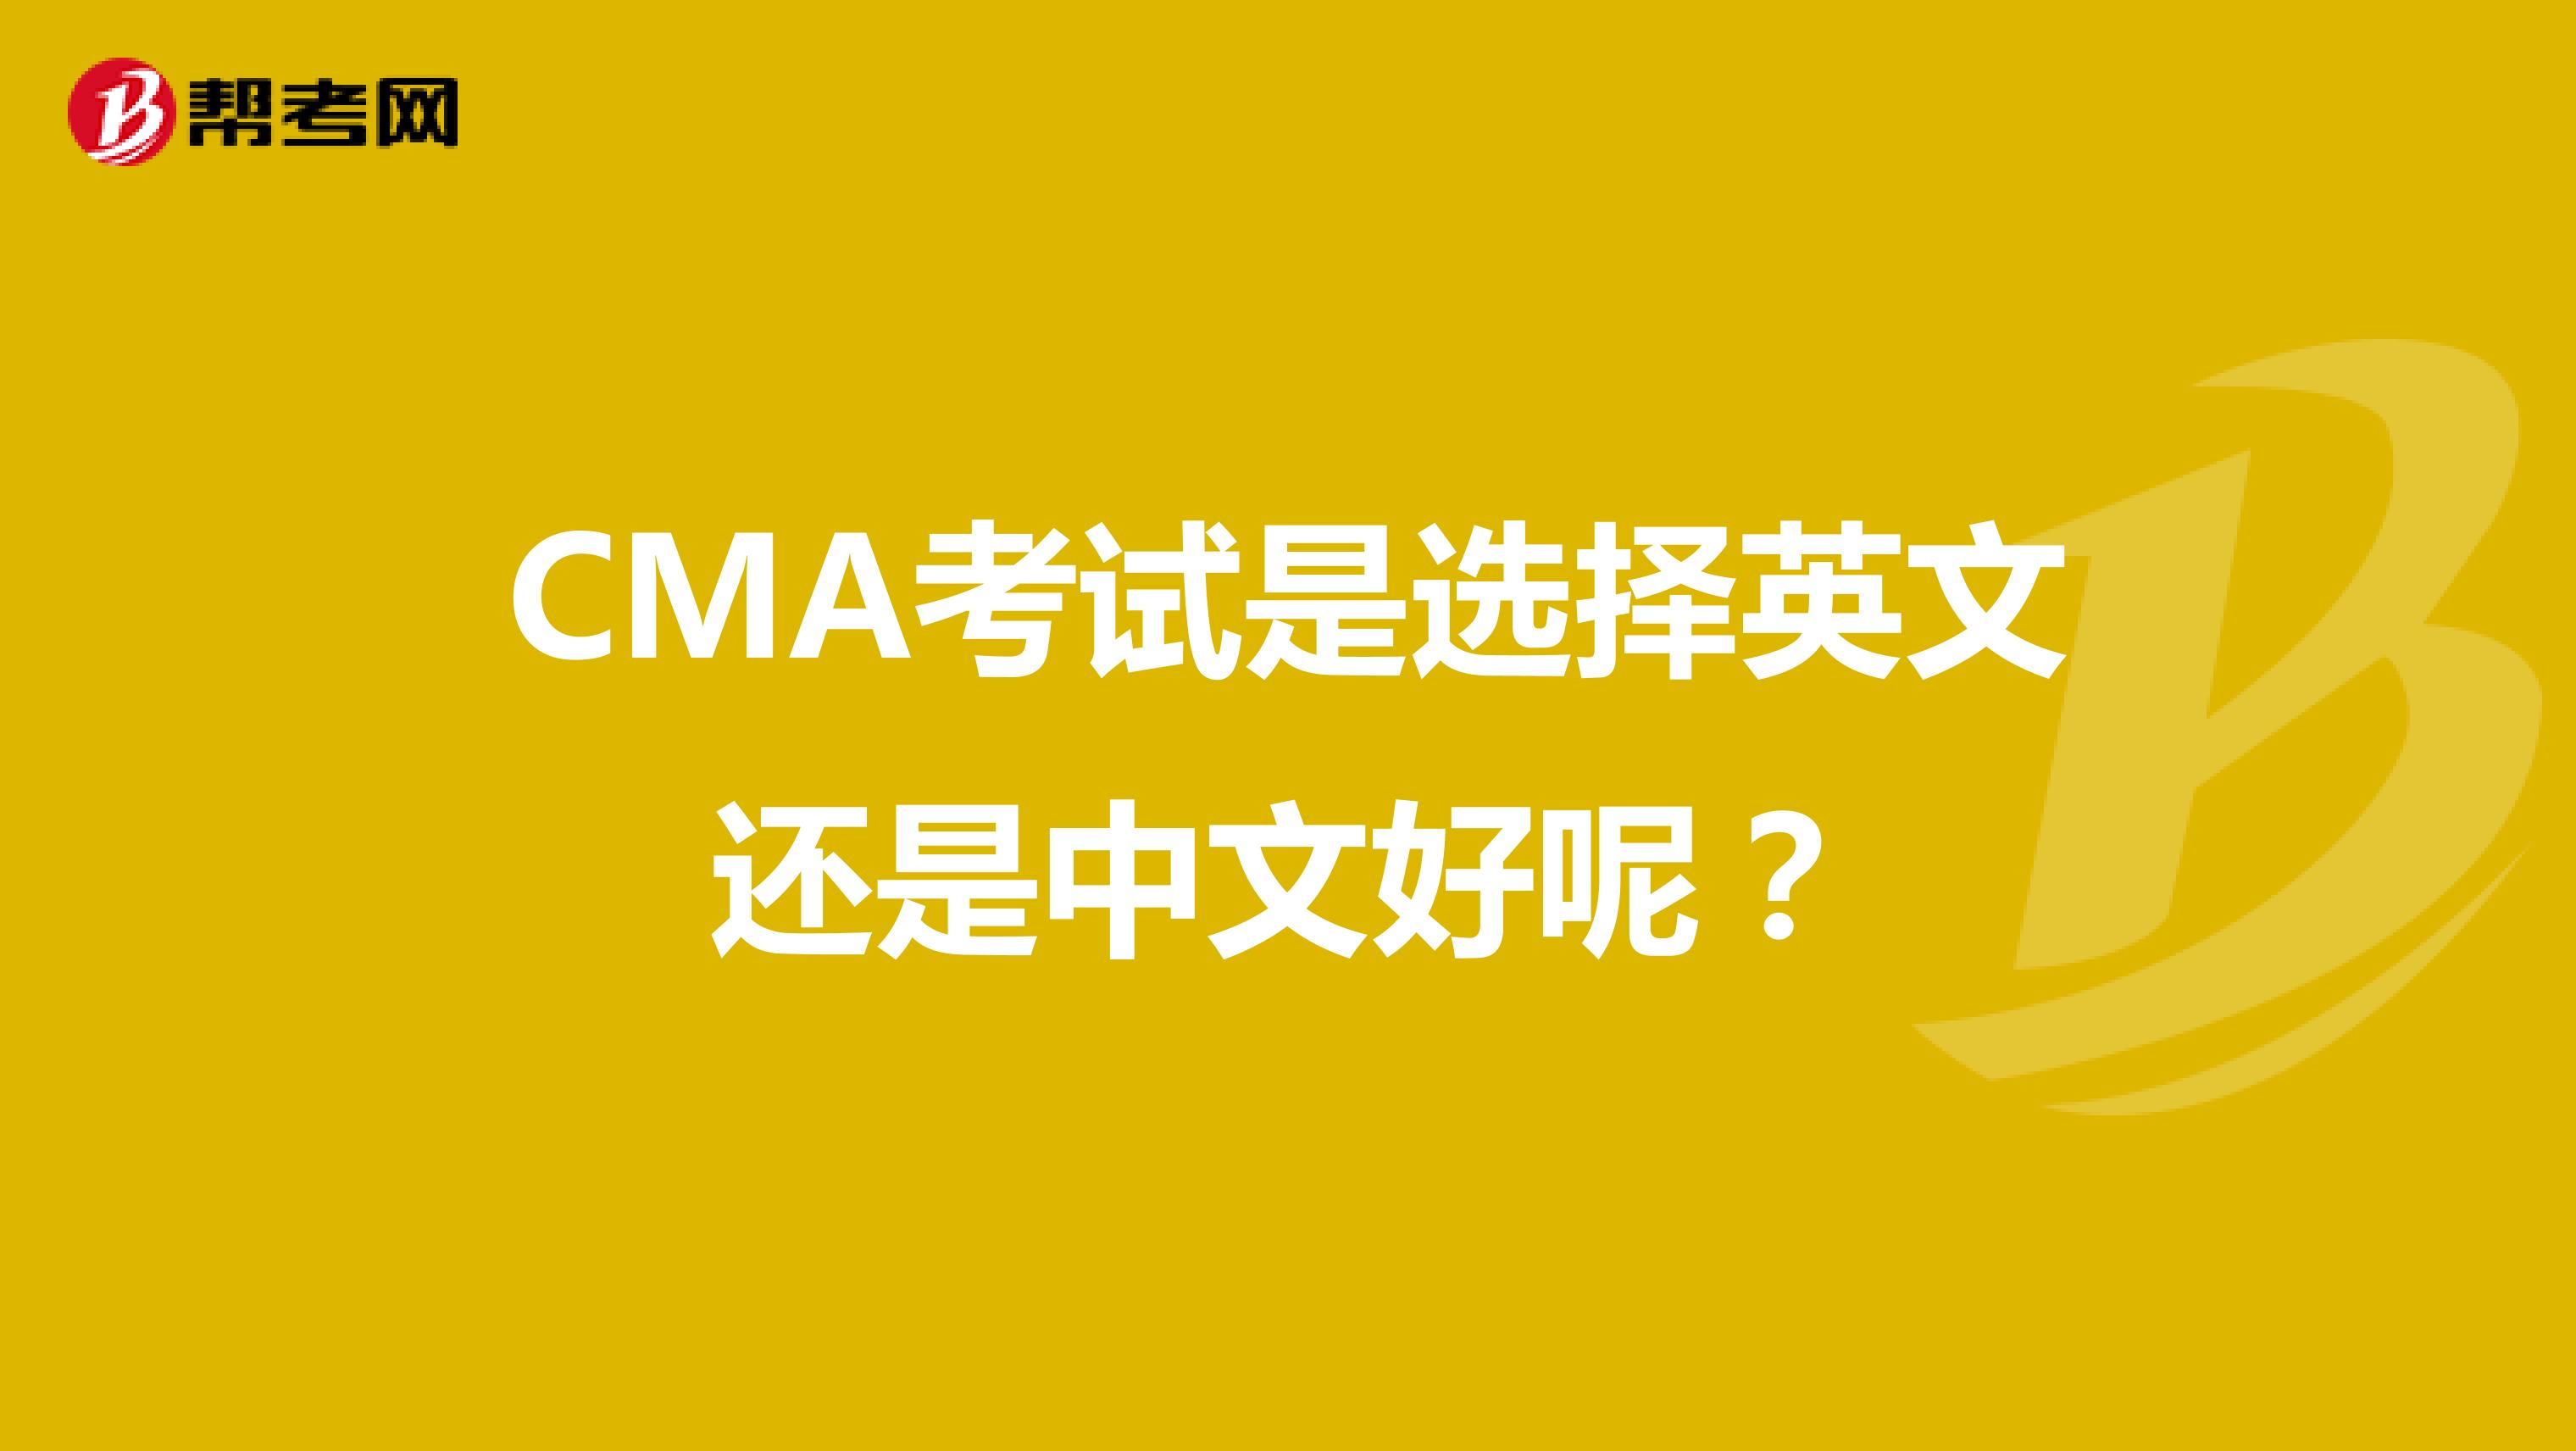 CMA考试是选择英文还是中文好呢？